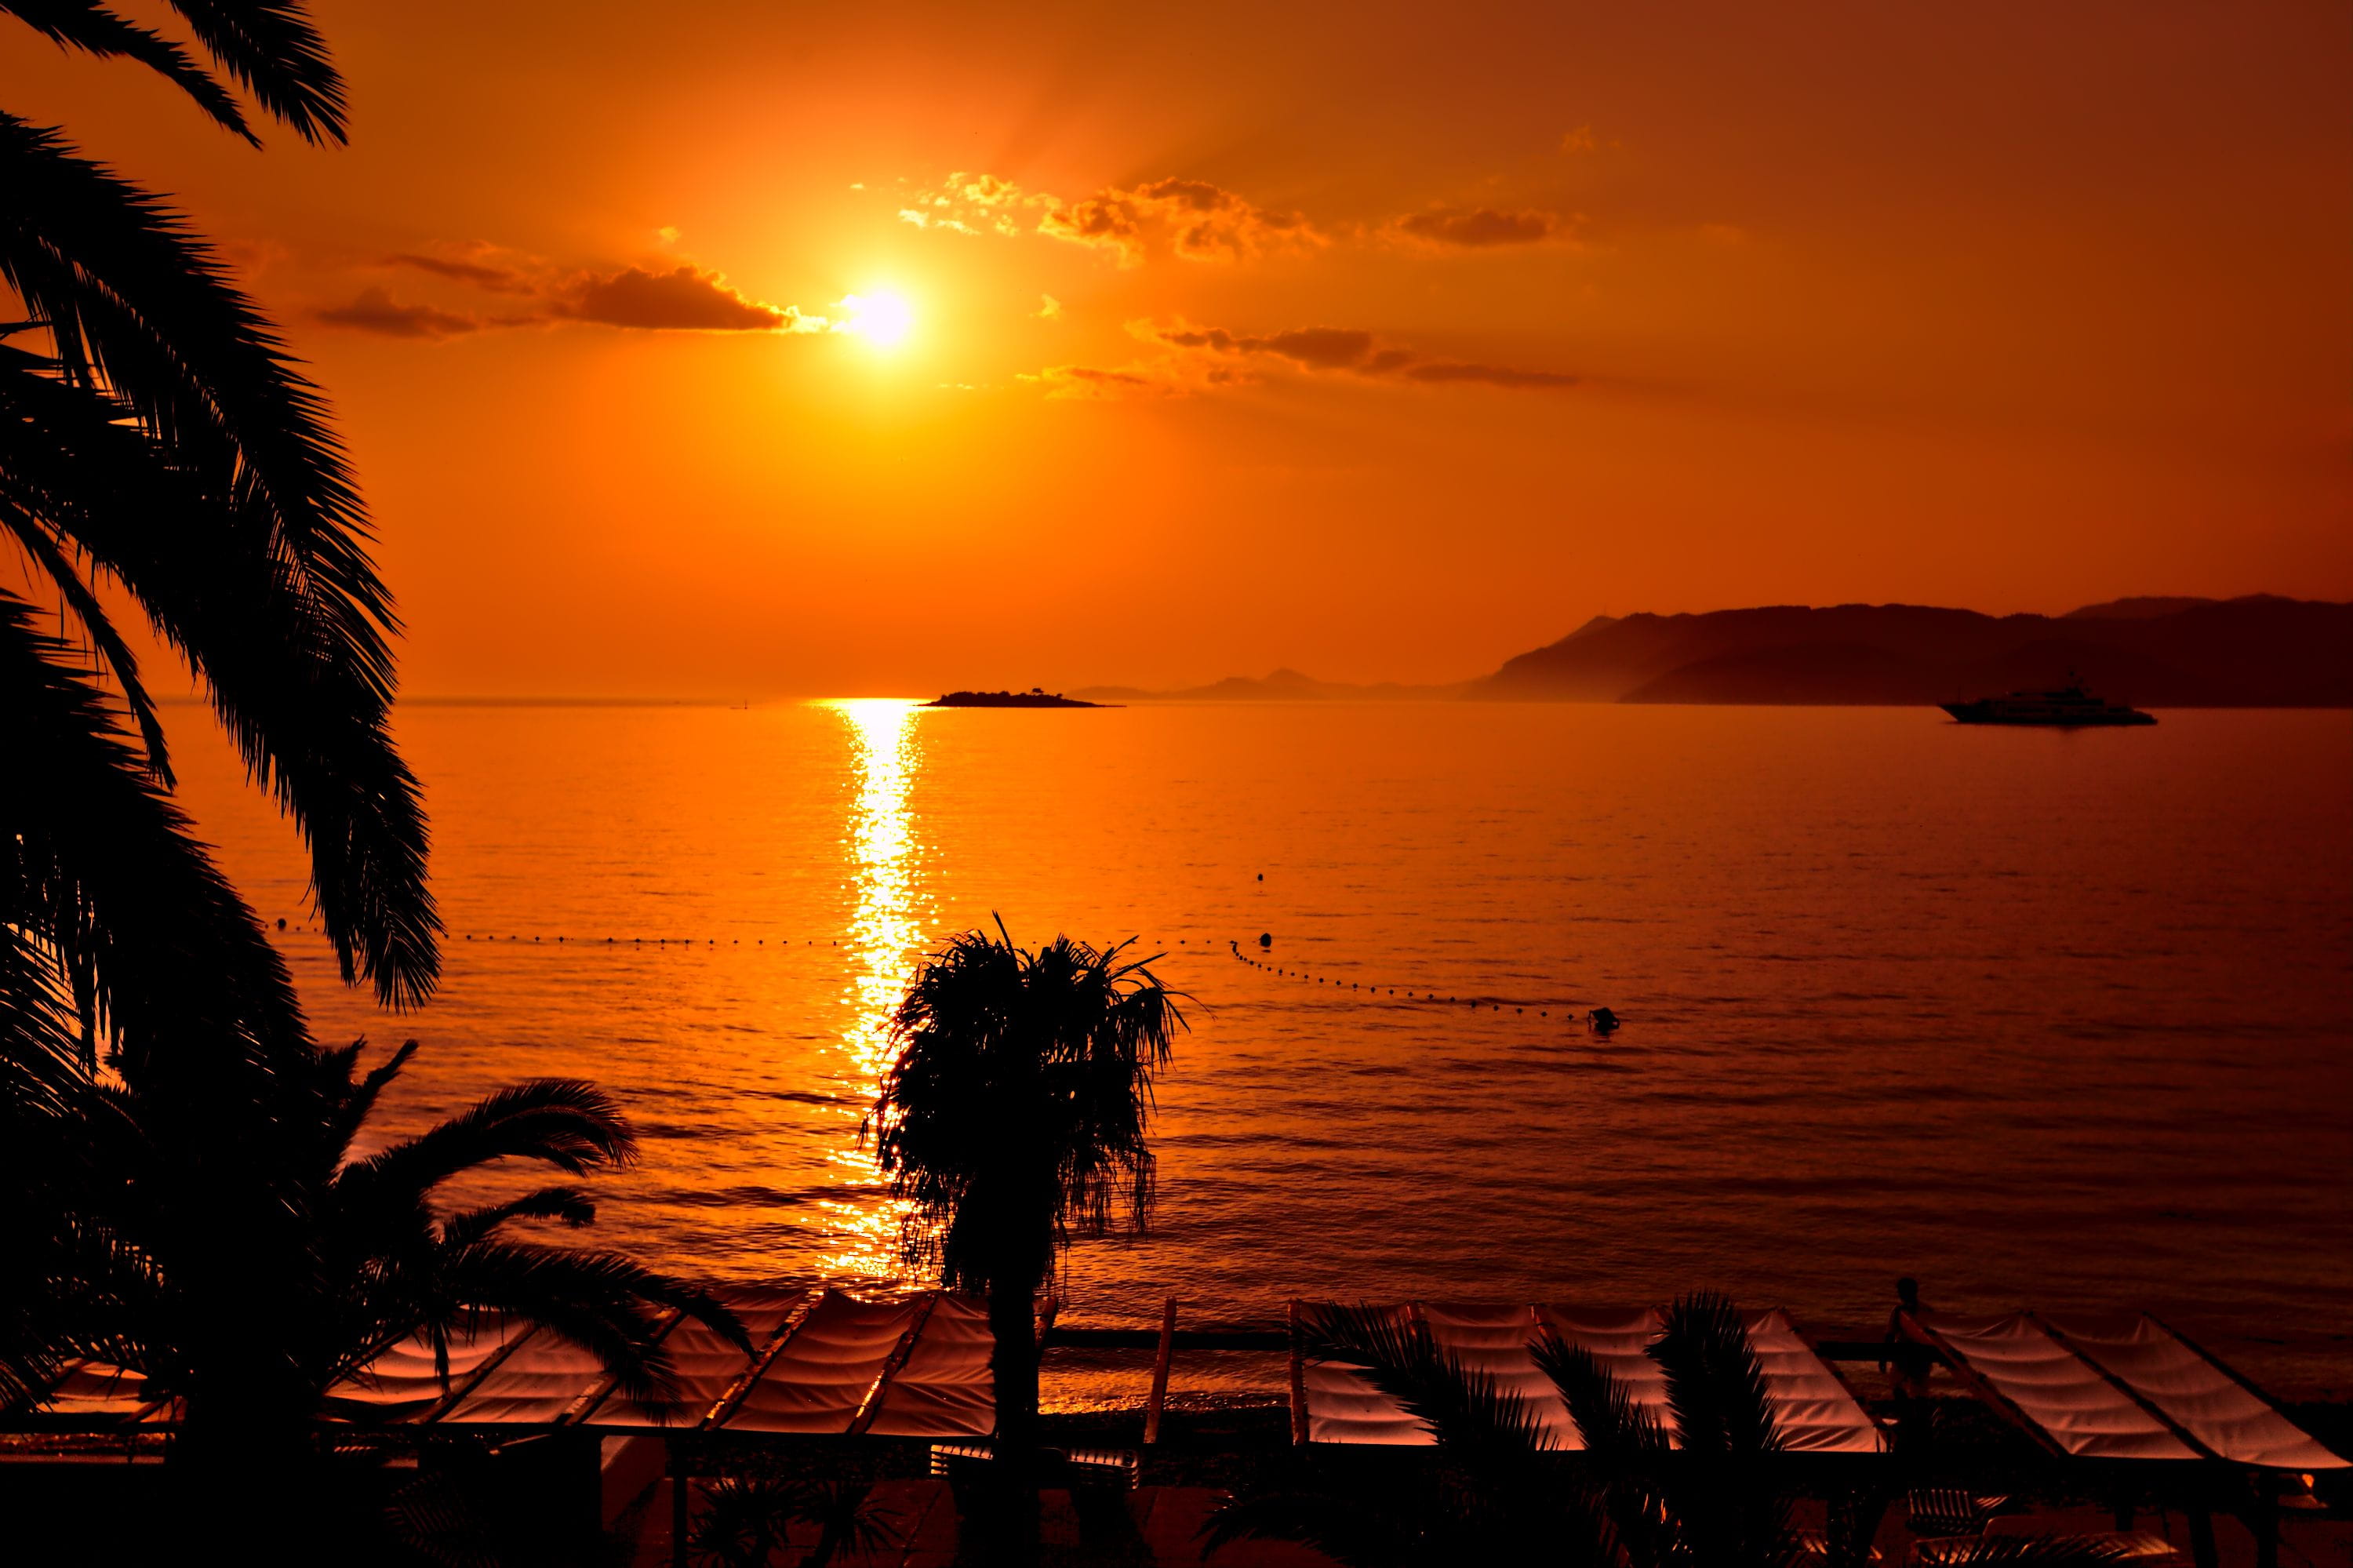 croatia, cavtat, hotel cavtat, boat, island, sunset, orange